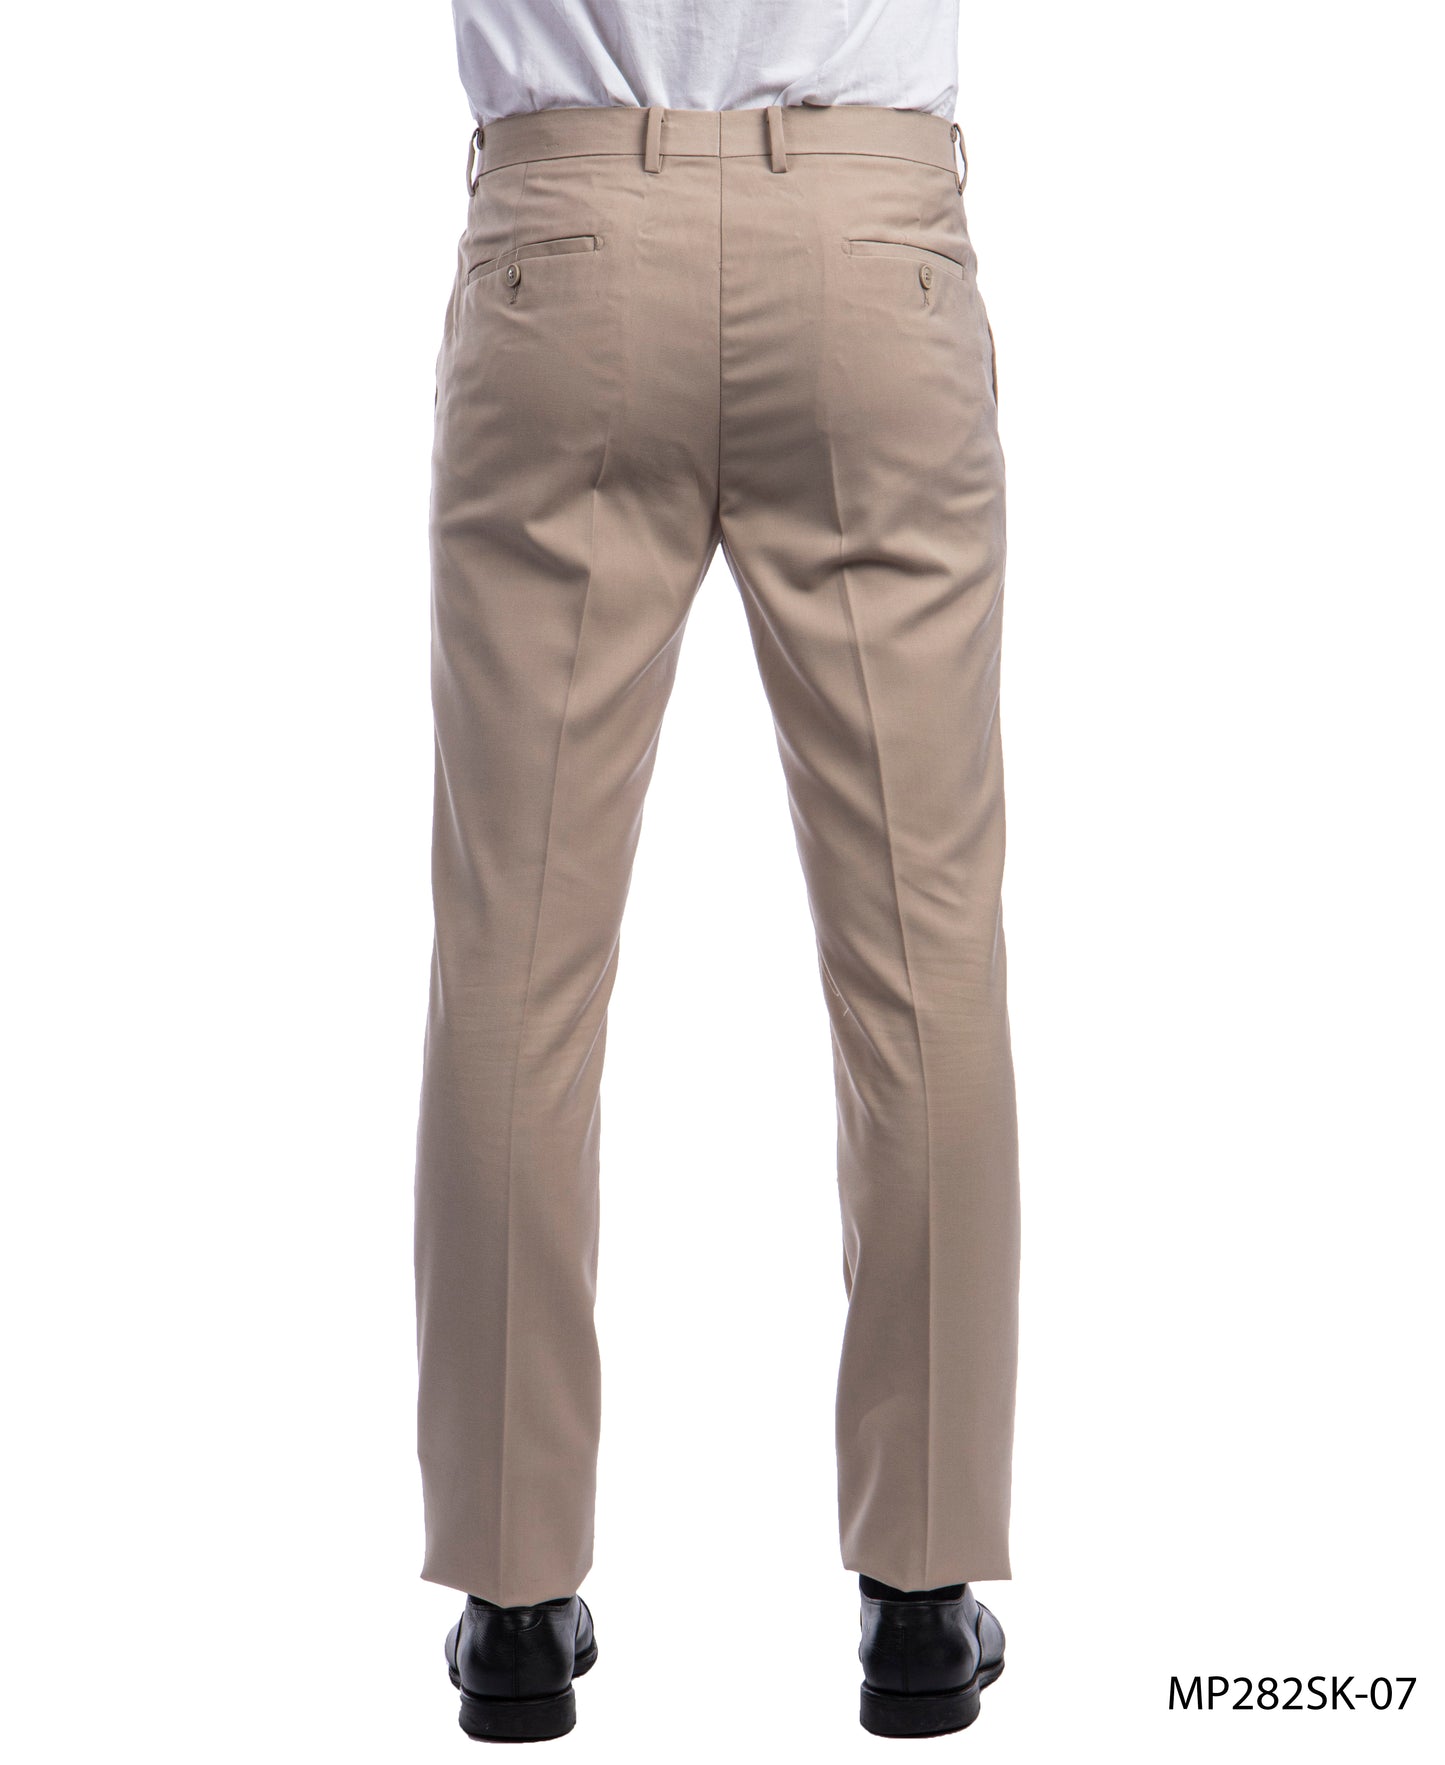 Sean Alexander Mens Mid Tan Performance Stretch Dress Pants MP282SK-07